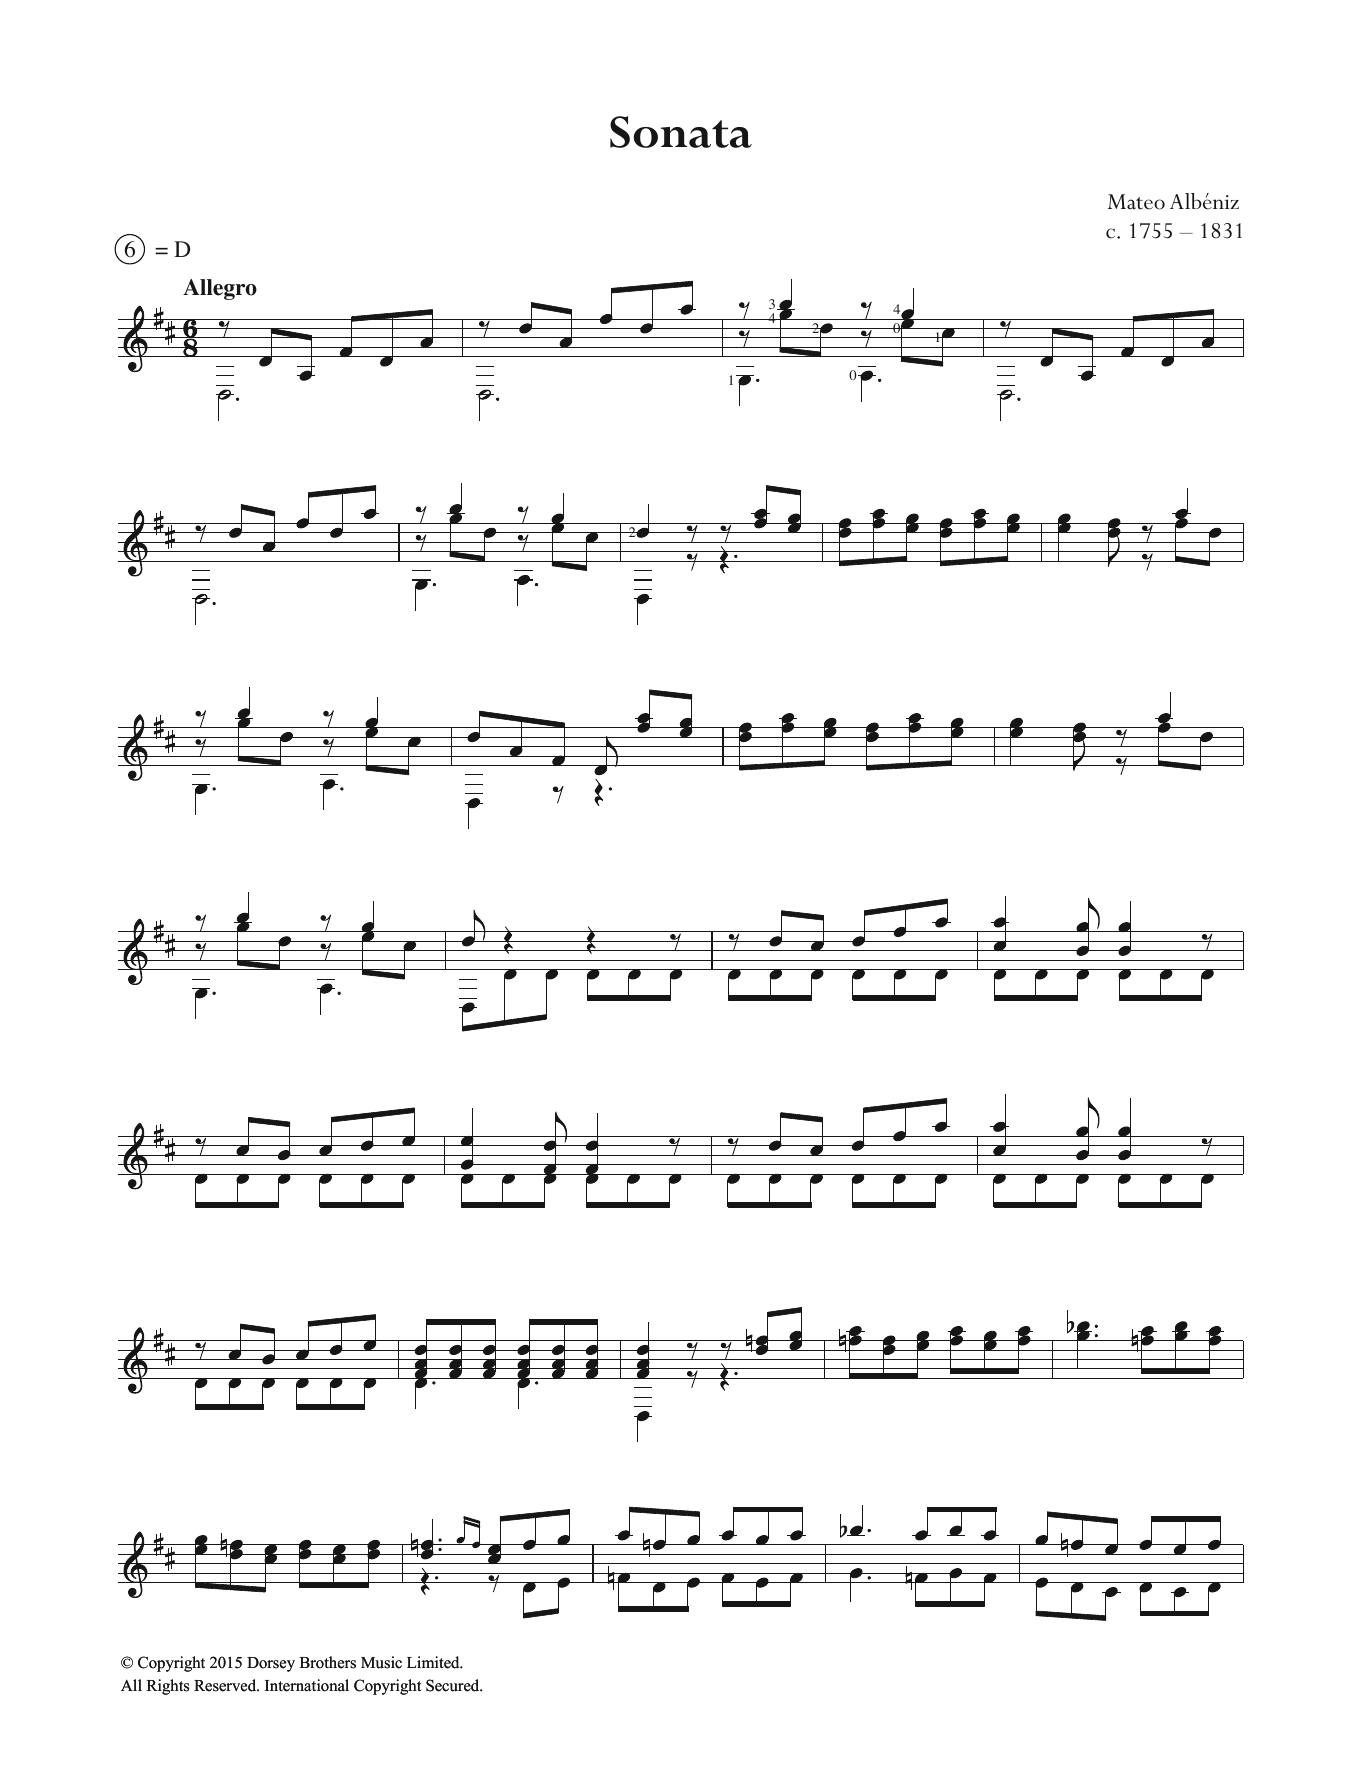 Mateo Albéniz Sonata Sheet Music Notes & Chords for Guitar - Download or Print PDF